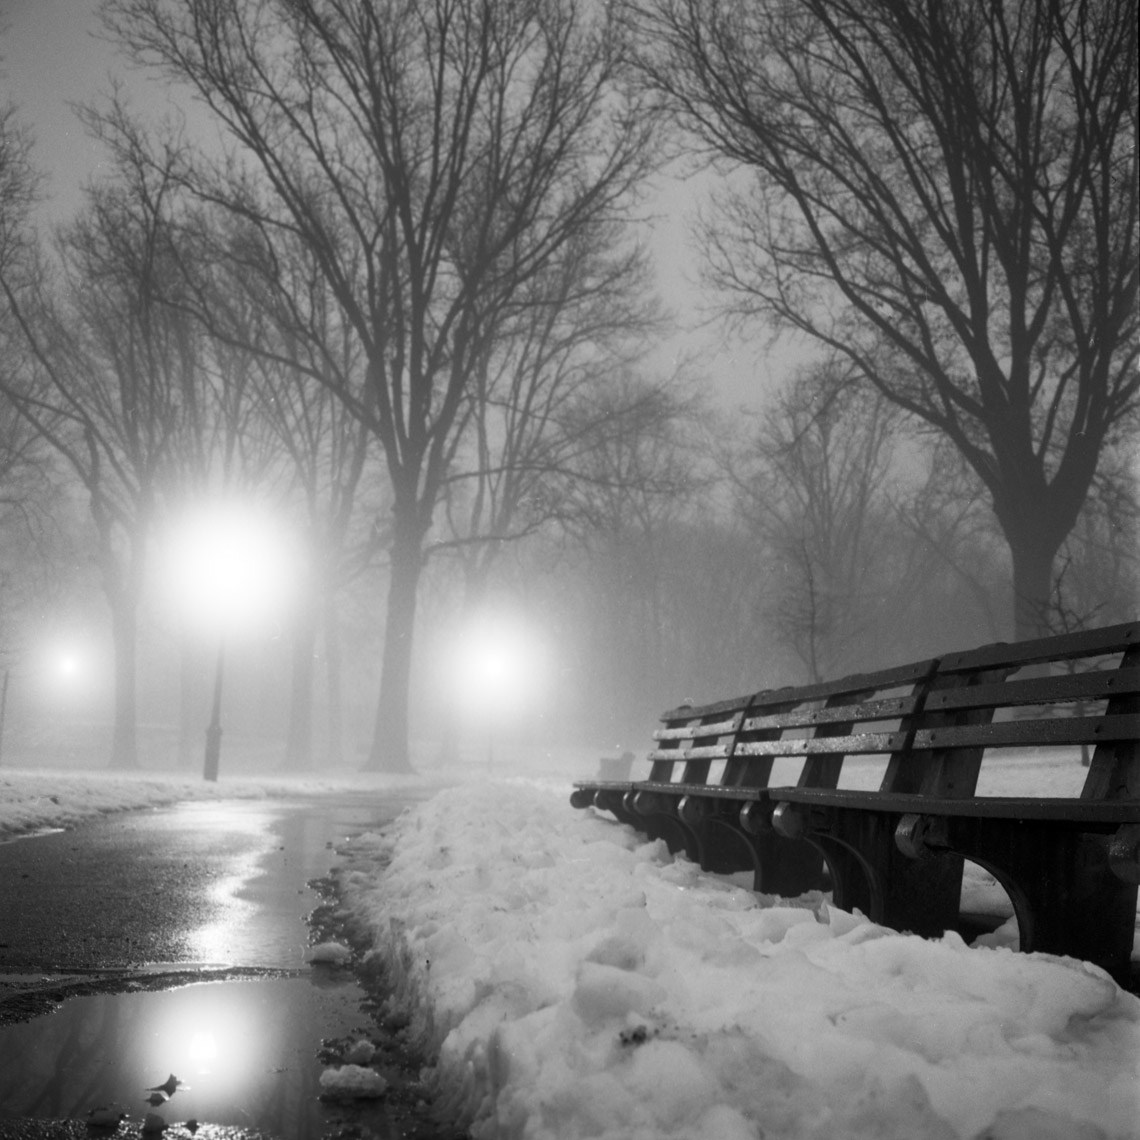 Prospect parkk benches at night, Prospect Park, Brooklyn. 